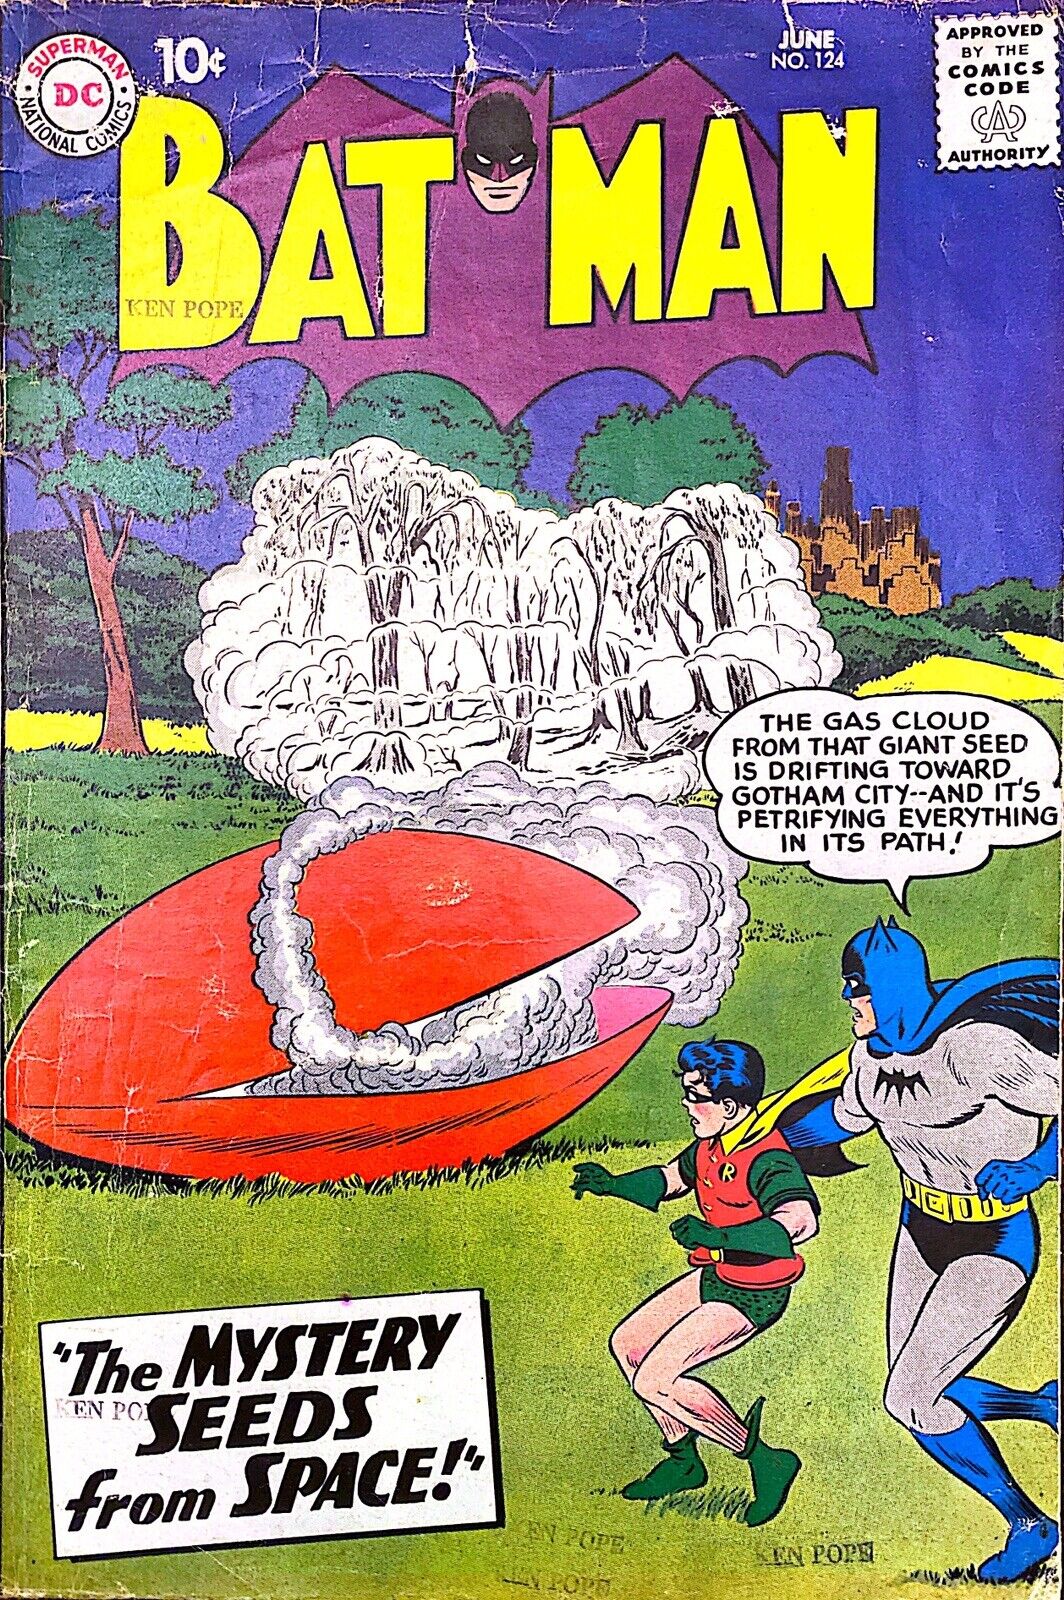 Batman #124 (1959) - Good/Very Good (3.0)